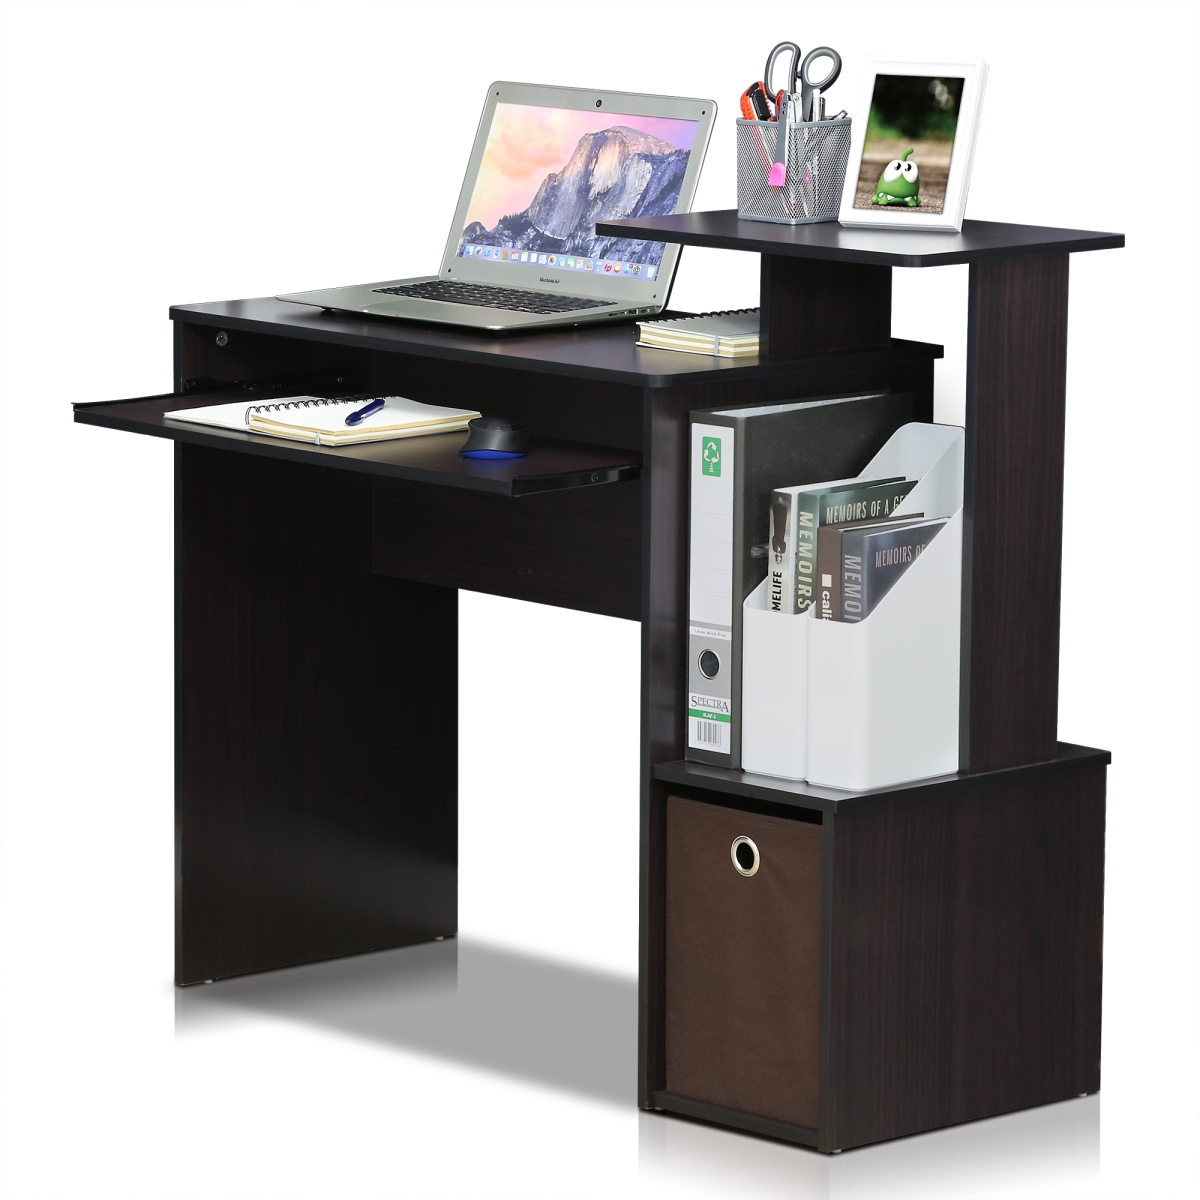 12095dwn Econ Multipurpose Home Office Computer Writing Desk With Bin, Dark Walnut